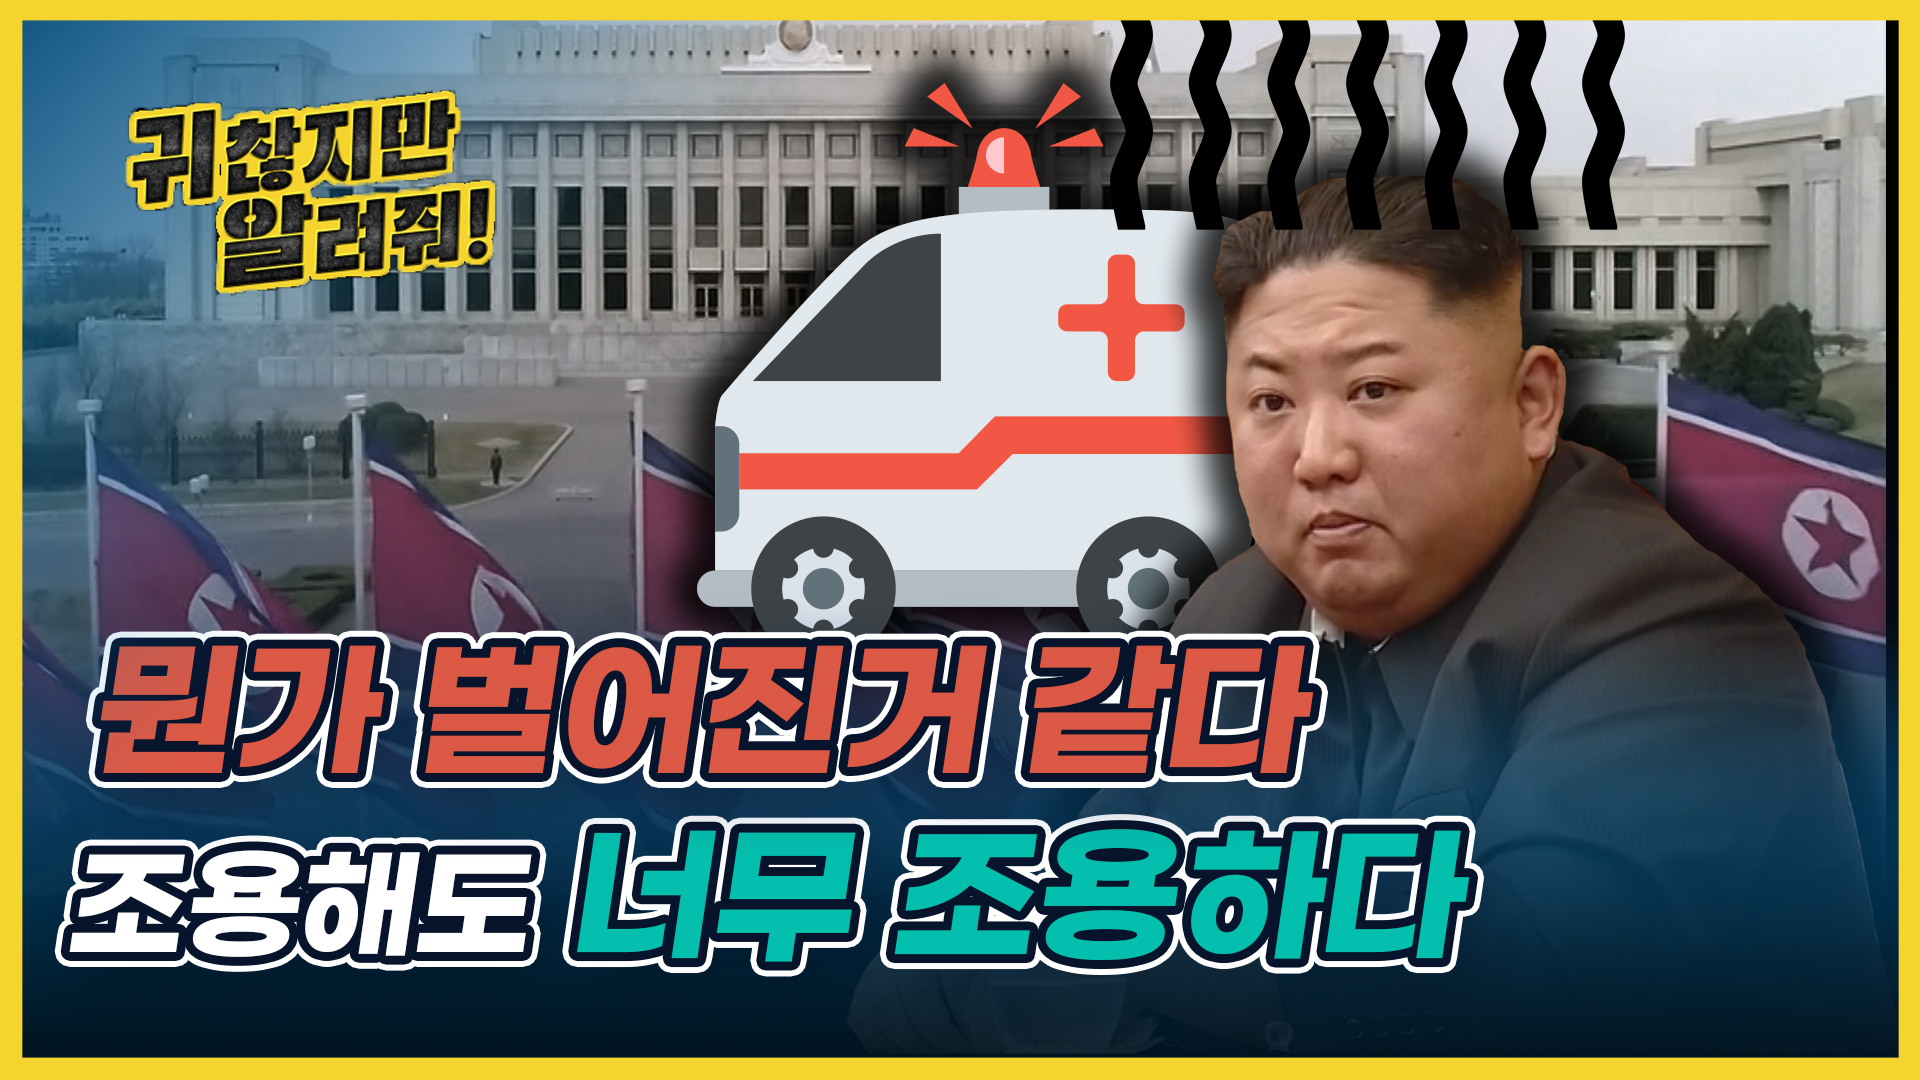 CNN 김정은 수술 후 위중!! 탈북자가 말하는 현재 북한 내부 분위기!! [귀찮지만 알려줘ep.11] 게시글 이미지